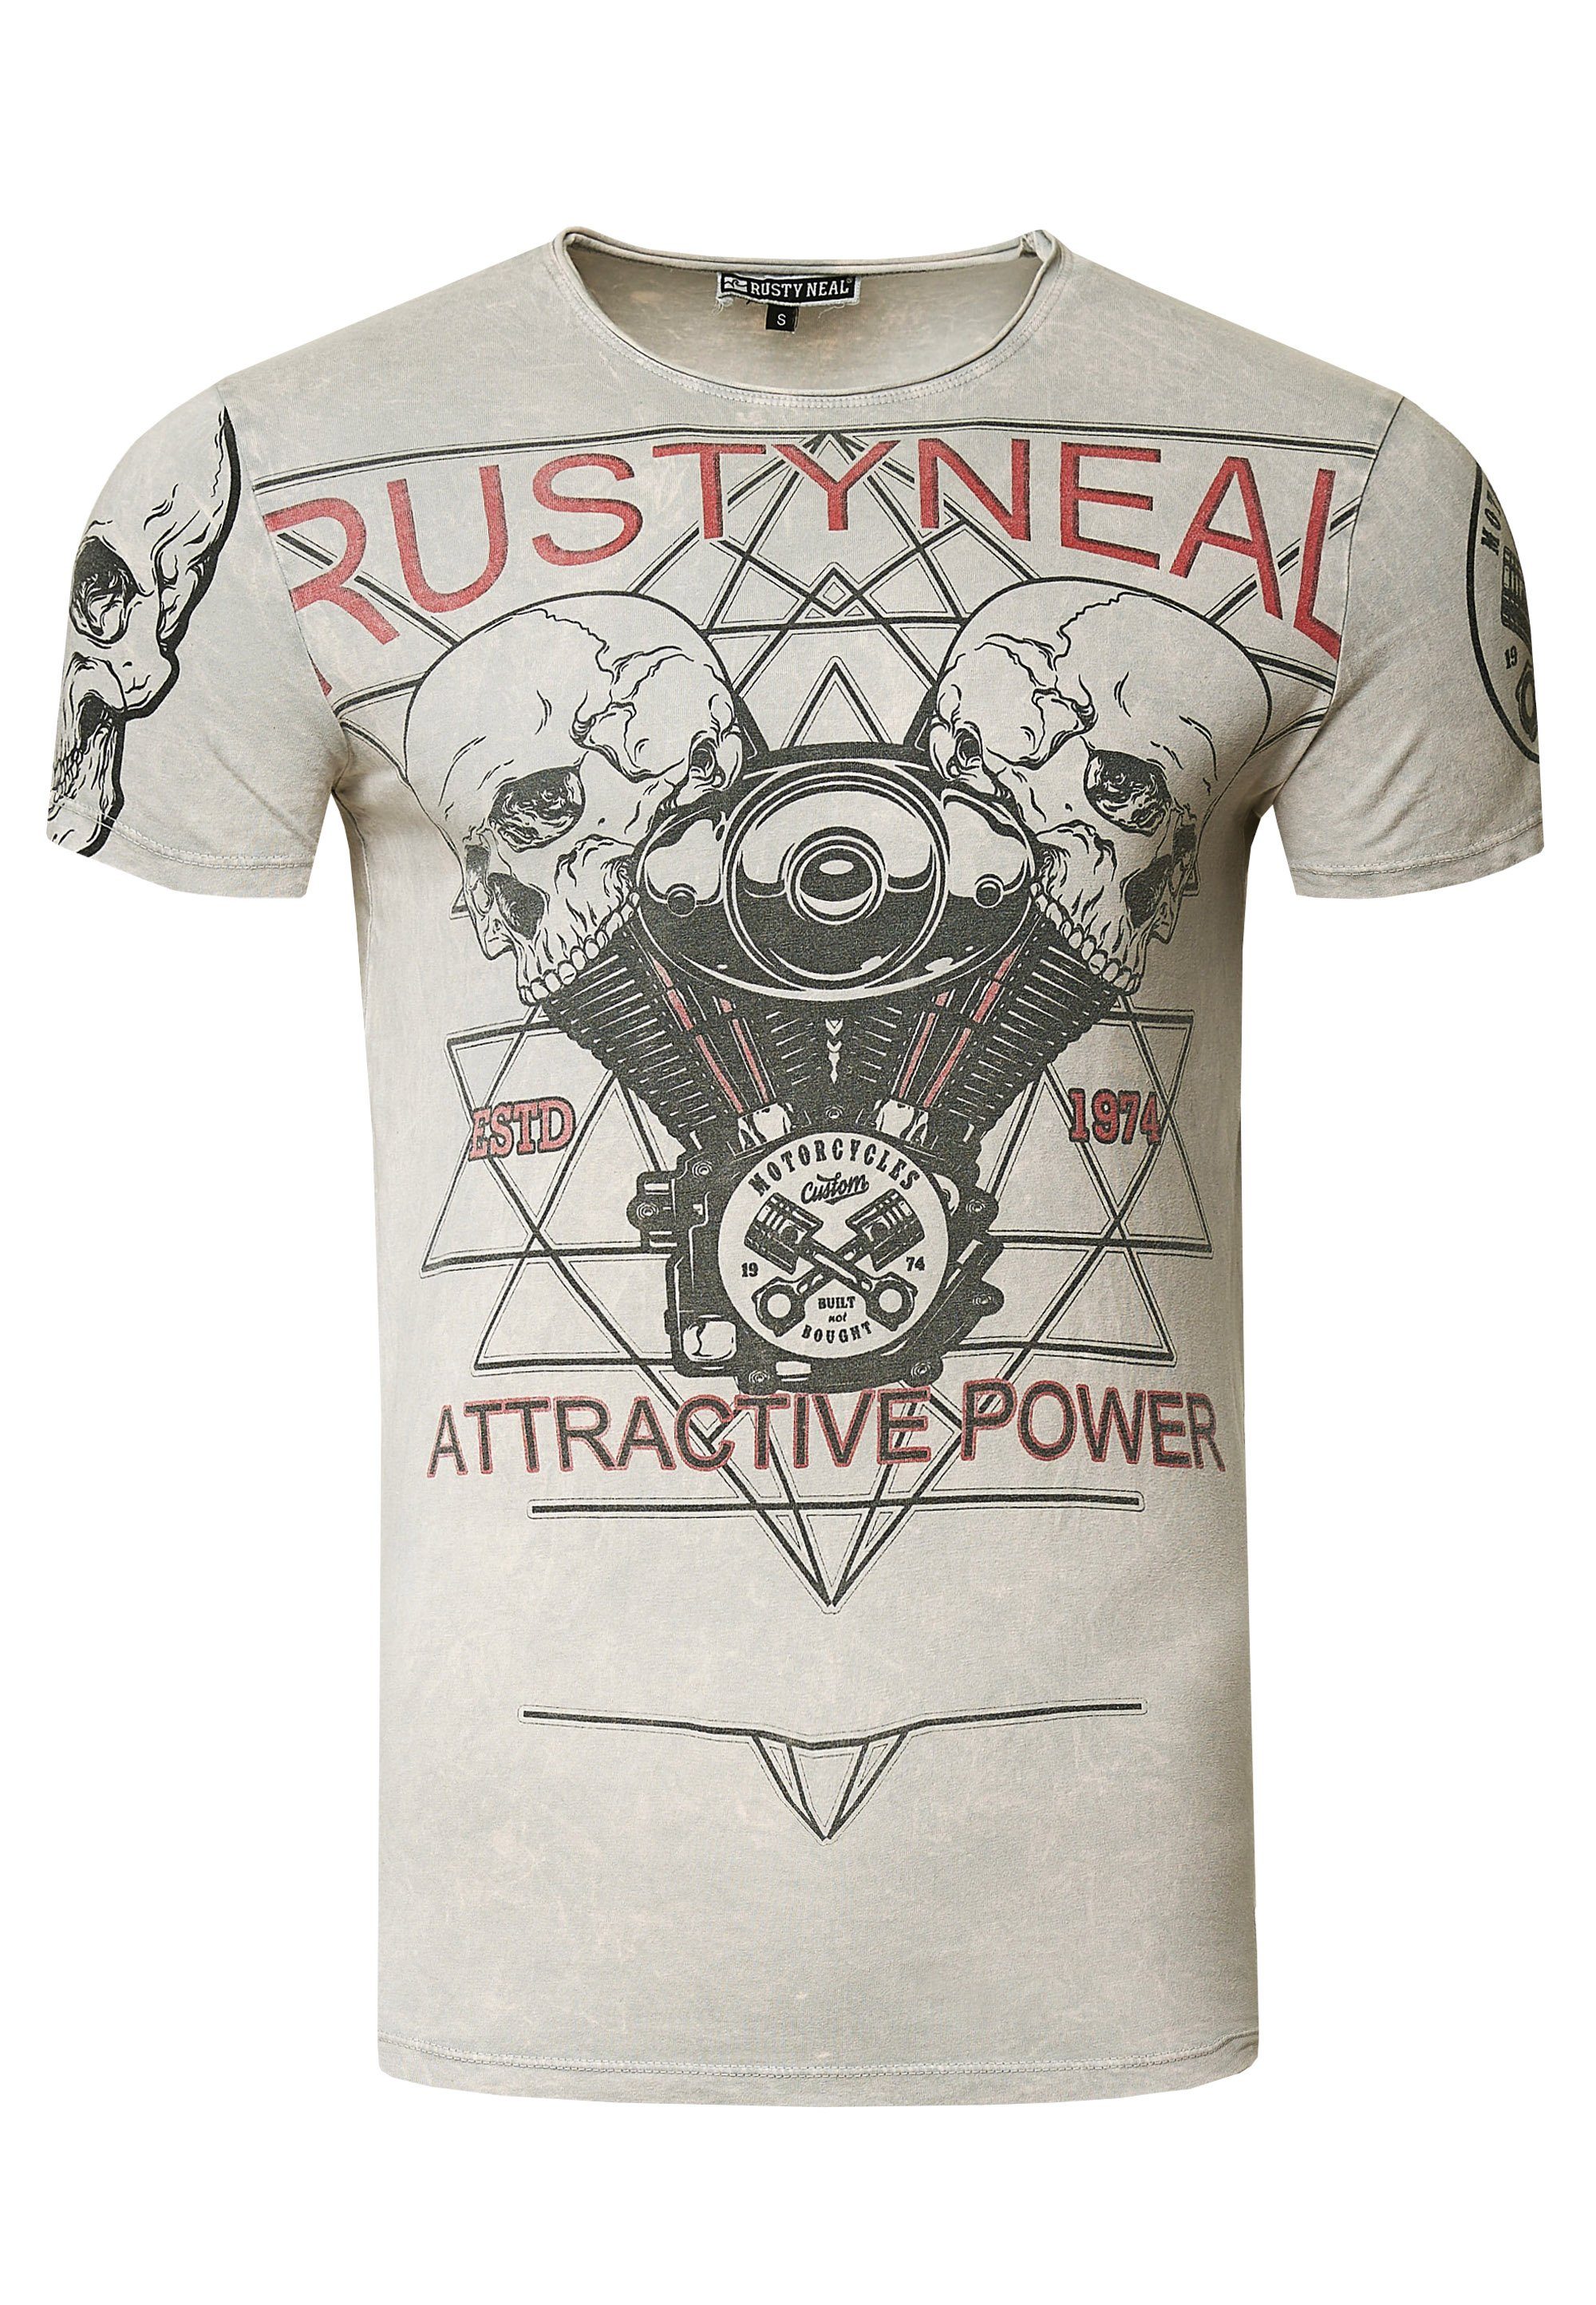 Rusty Neal T-Shirt mit coolem grau Frontprint